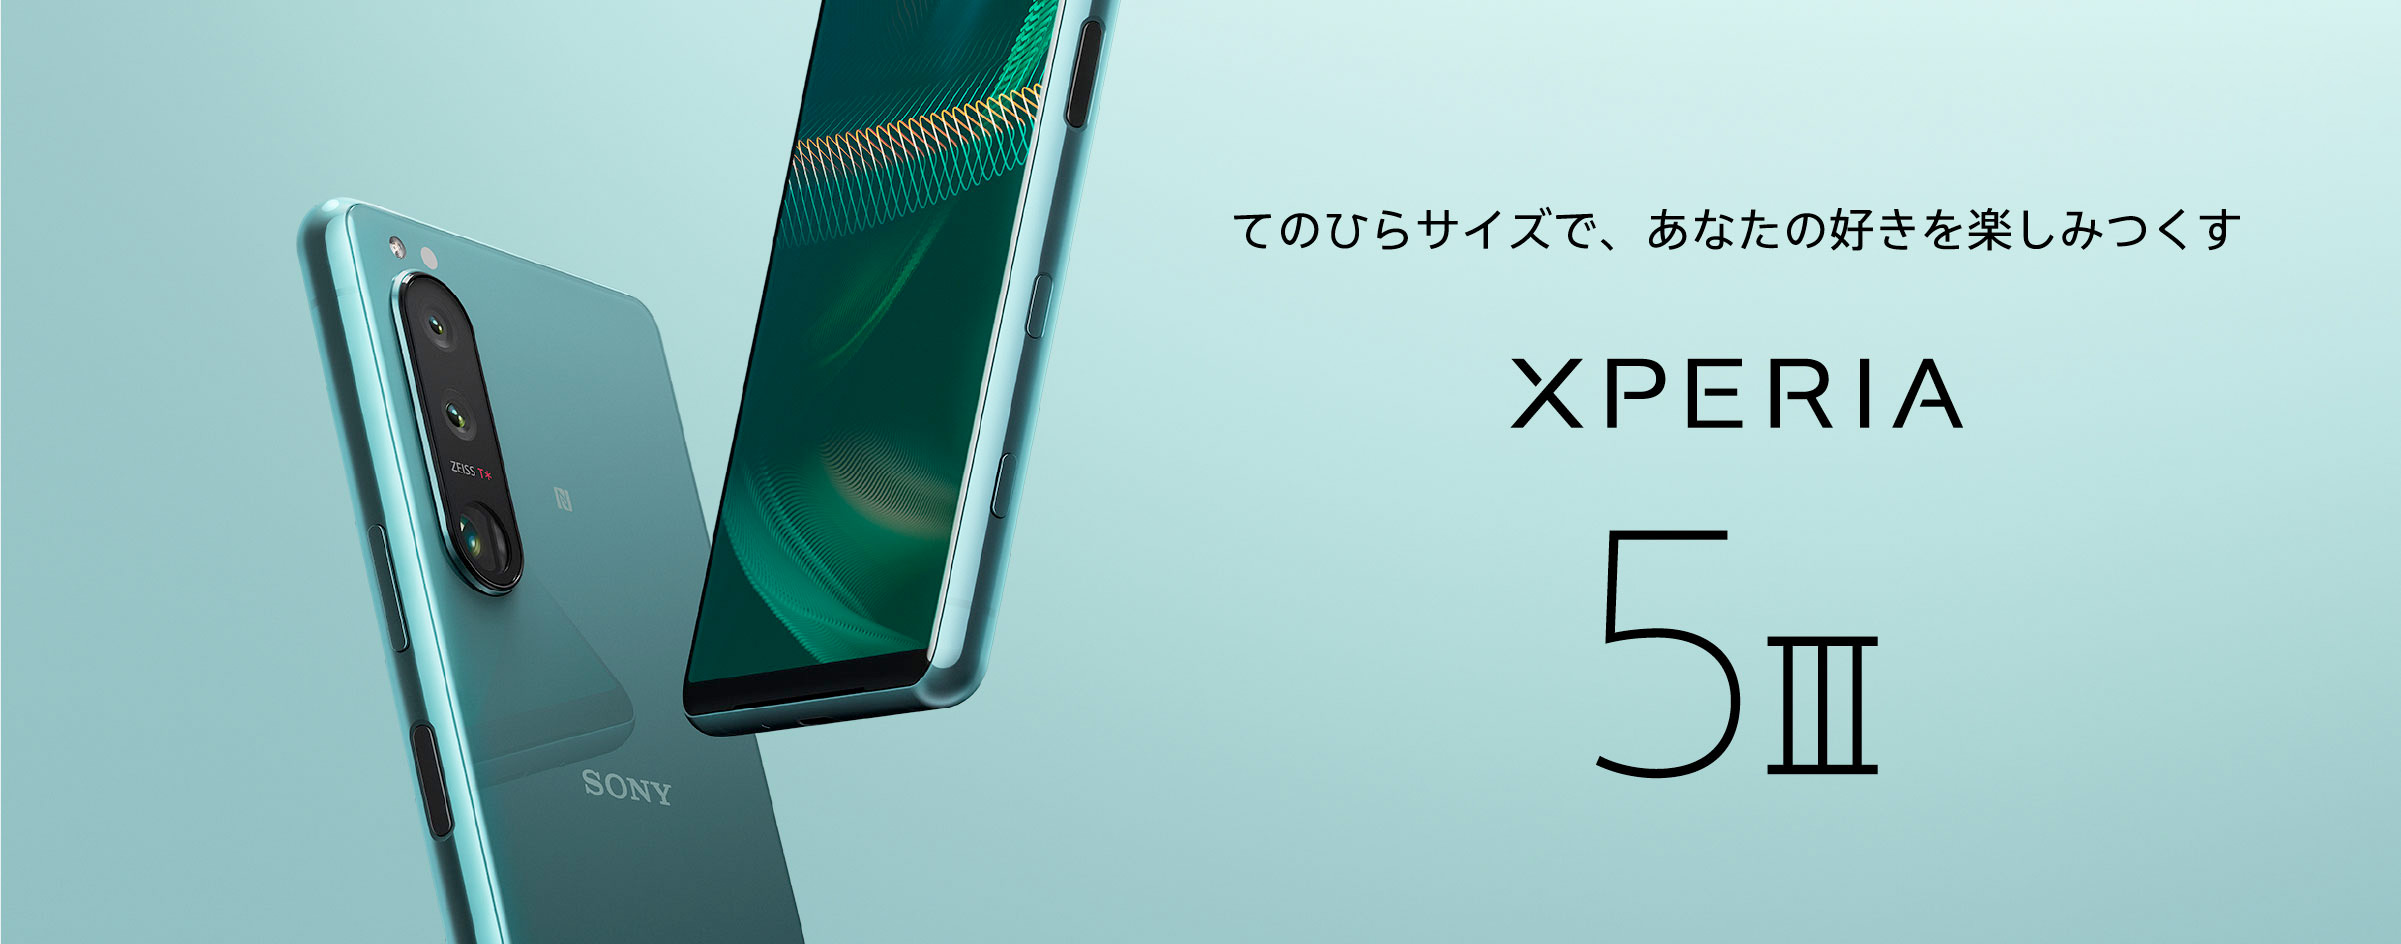 Xperia 5 III | Xperia（エクスペリア） | ソニー